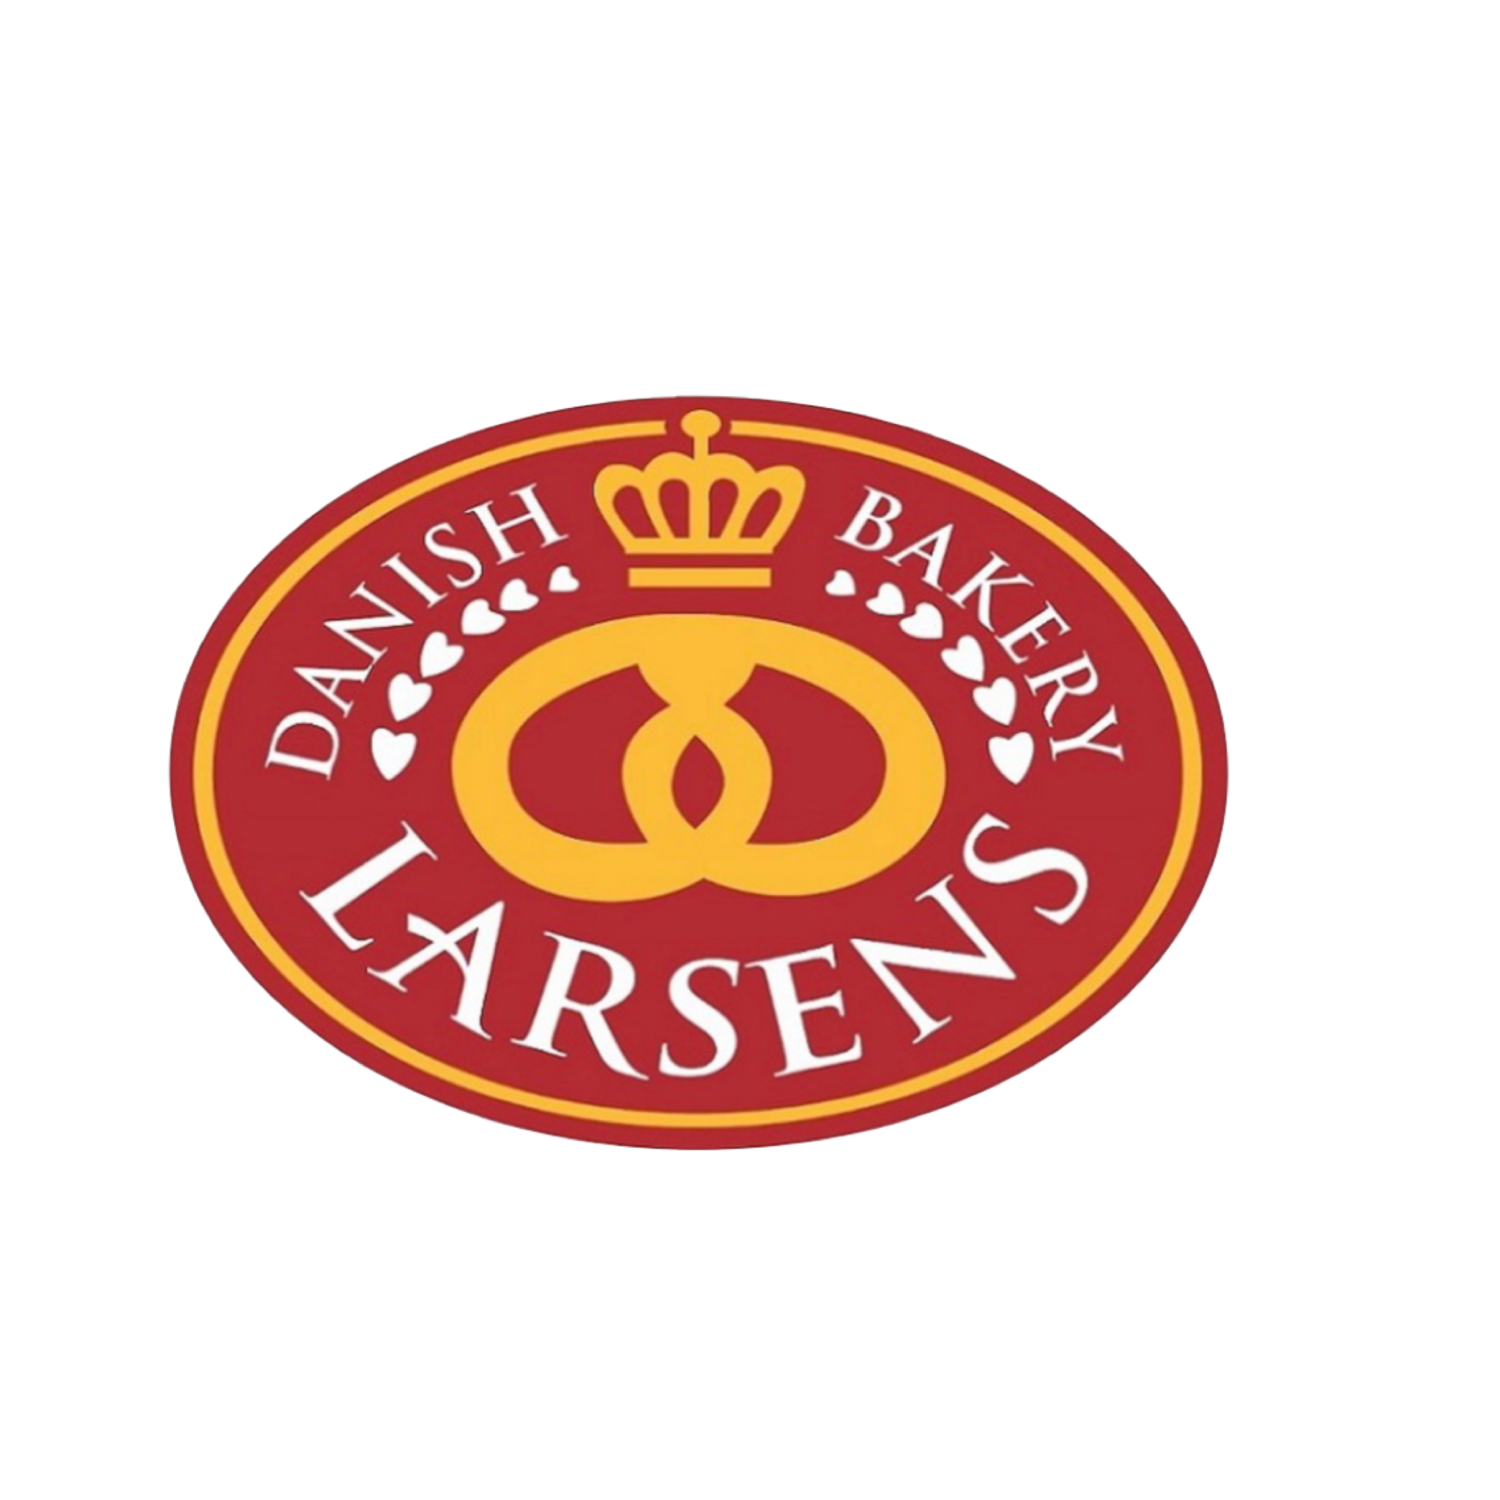 Larsen’s Original Bakery